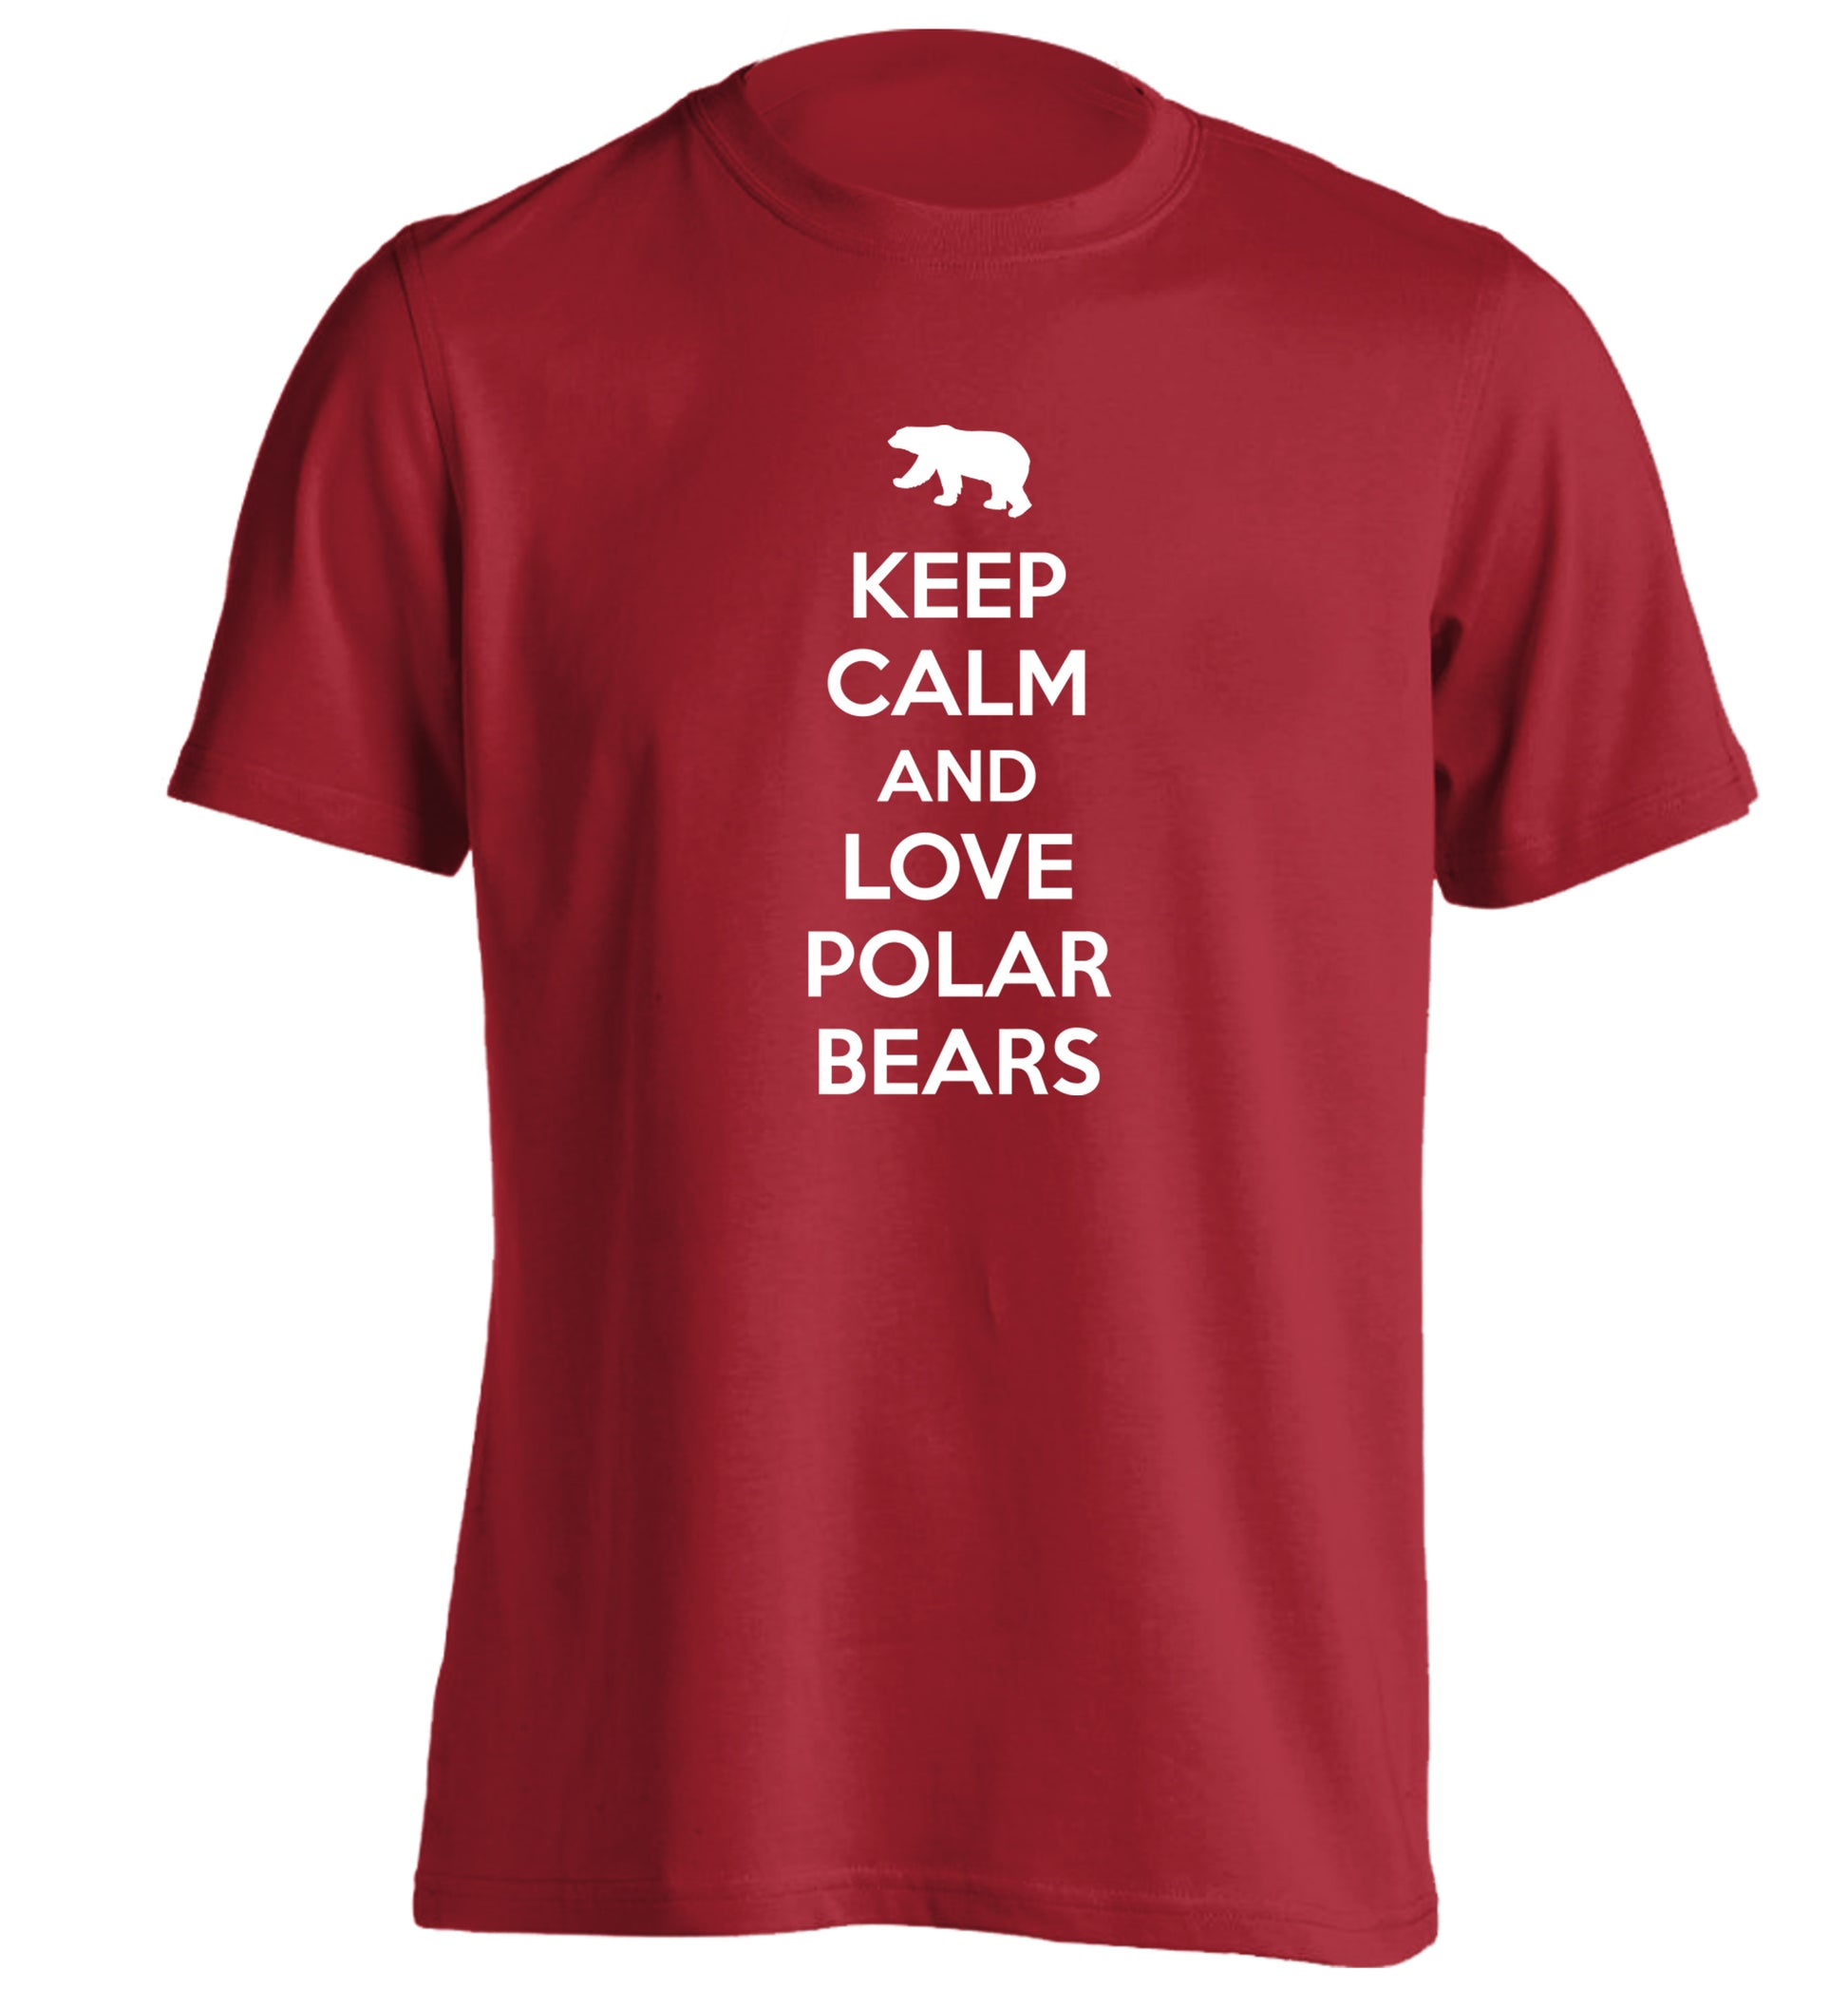 Keep calm and love polar bears adults unisex red Tshirt 2XL